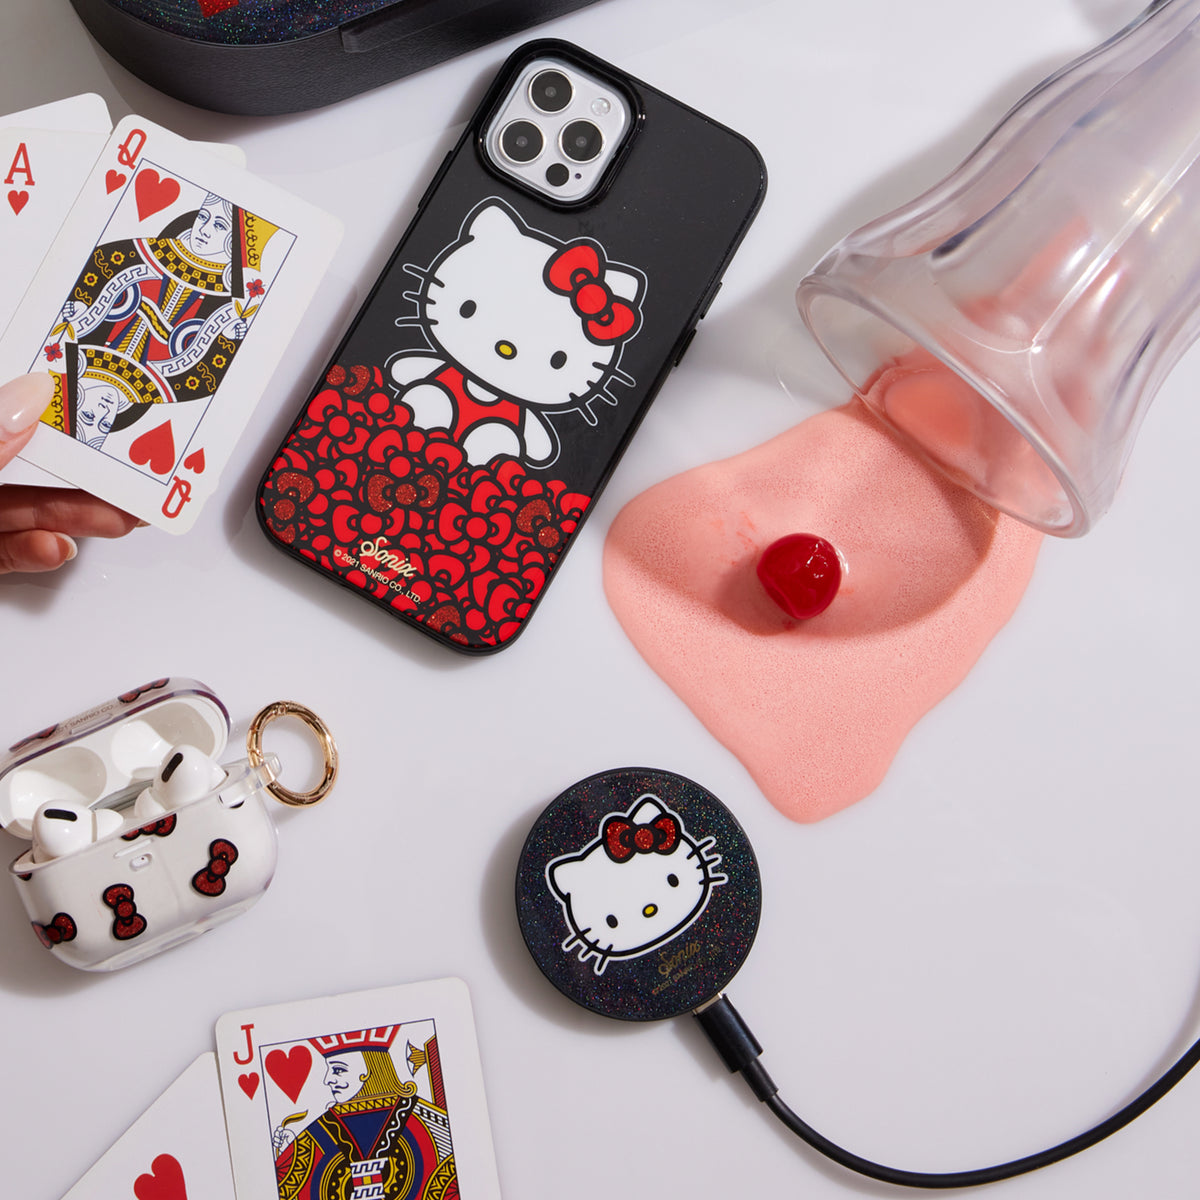  Sonix Sanrio - Classic Hello Kitty Case for Airpods